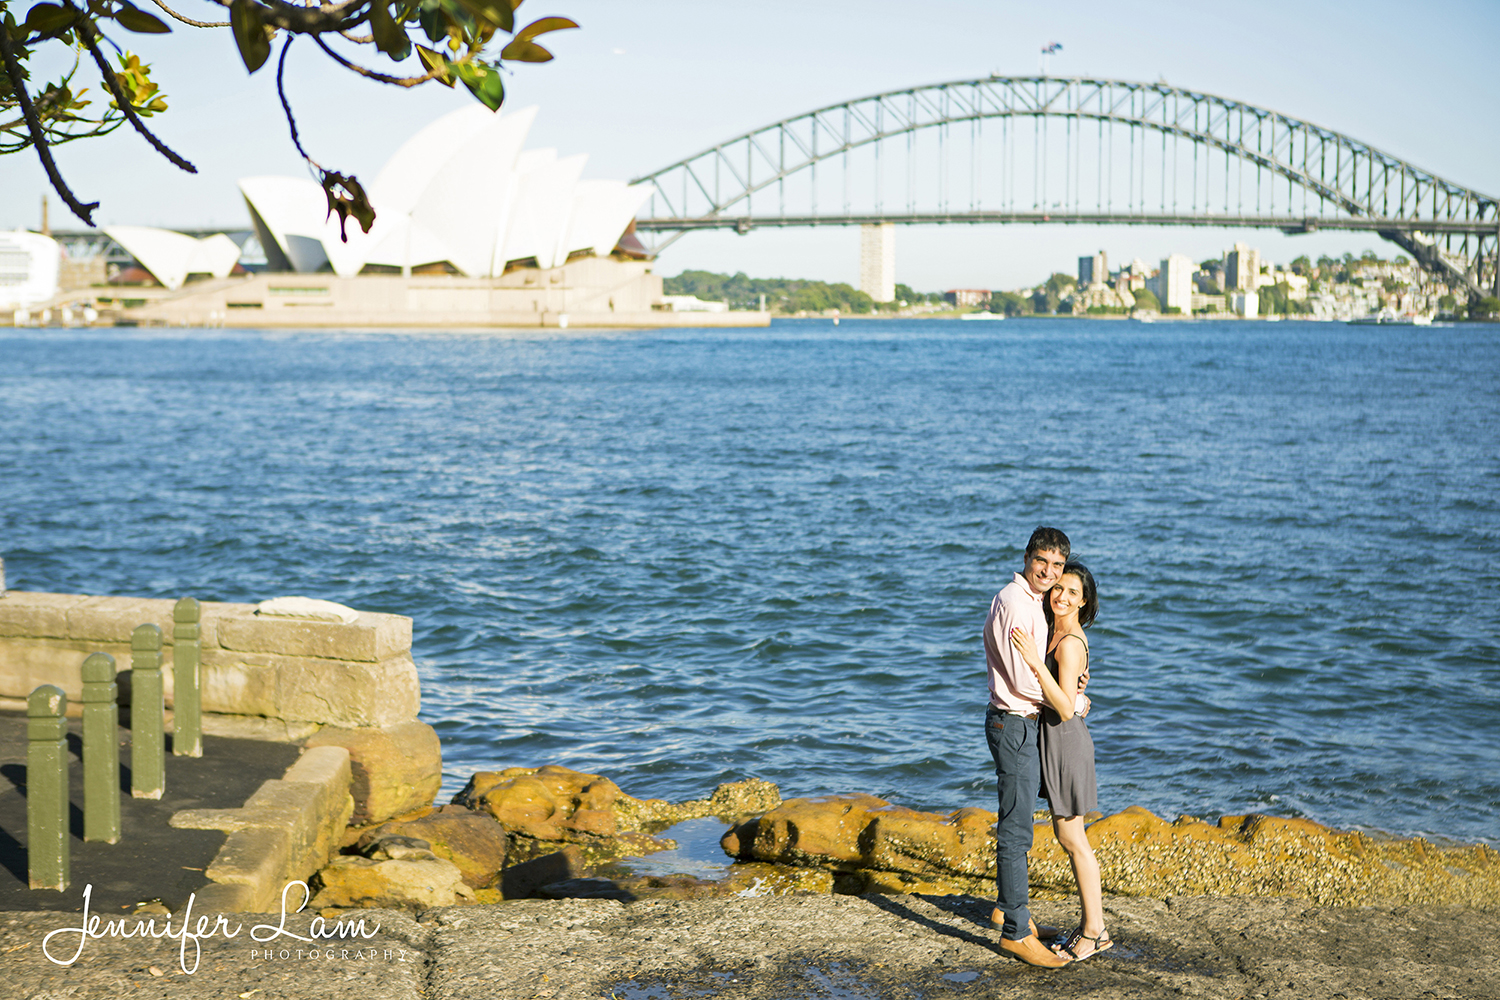 S&J - Jennifer Lam Photography - Sydney Wedding Photographer (18).jpg